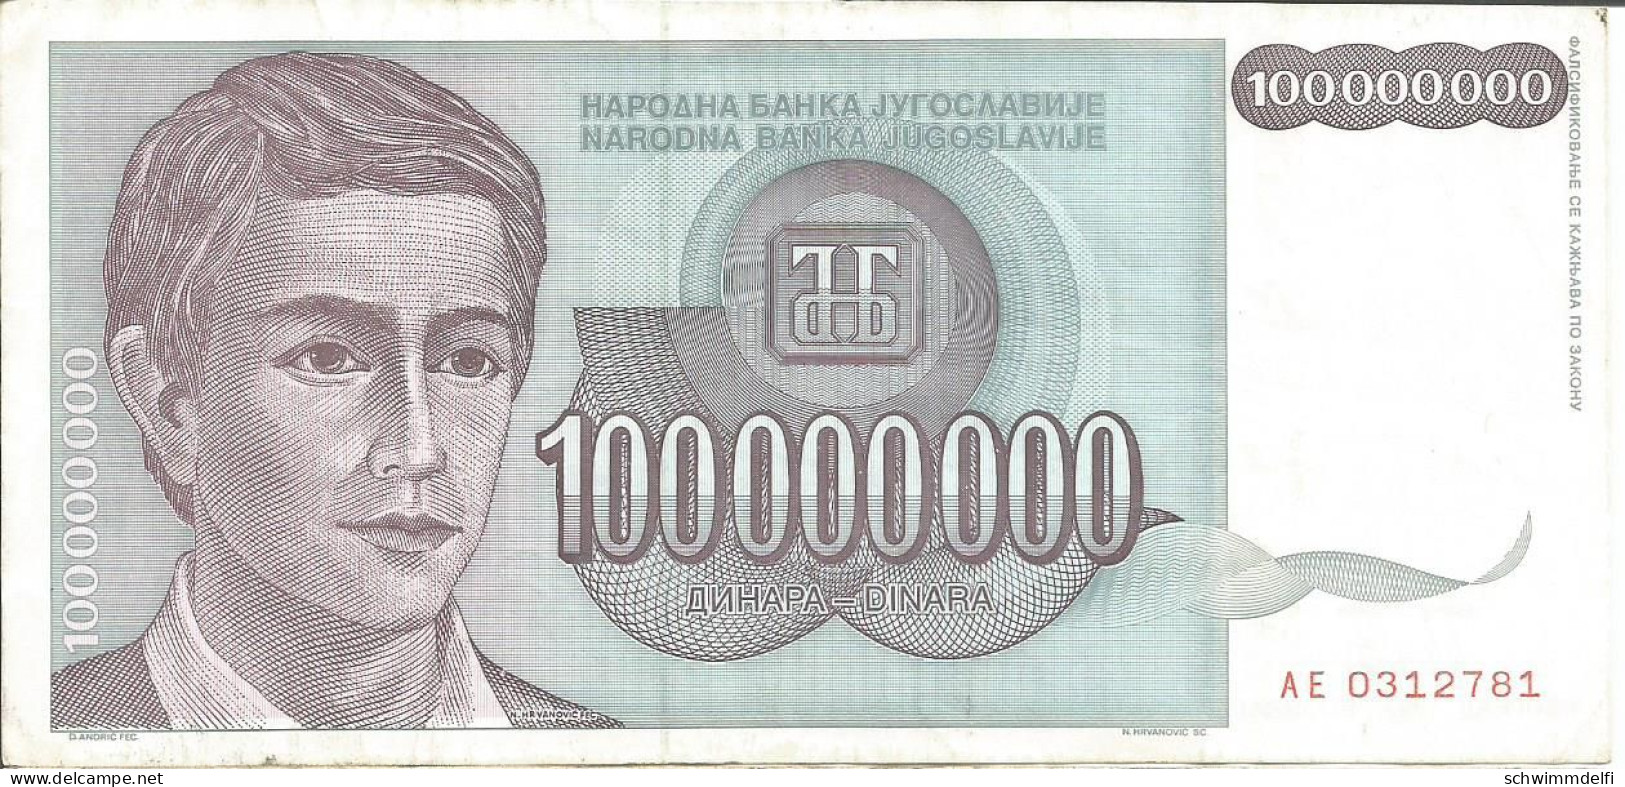 JUGOLAWIEN - YUGOSLAVIA - 100.000.000 DINARA 1993 - EBC - SEHR SCHON - VERY FINE - Yugoslavia